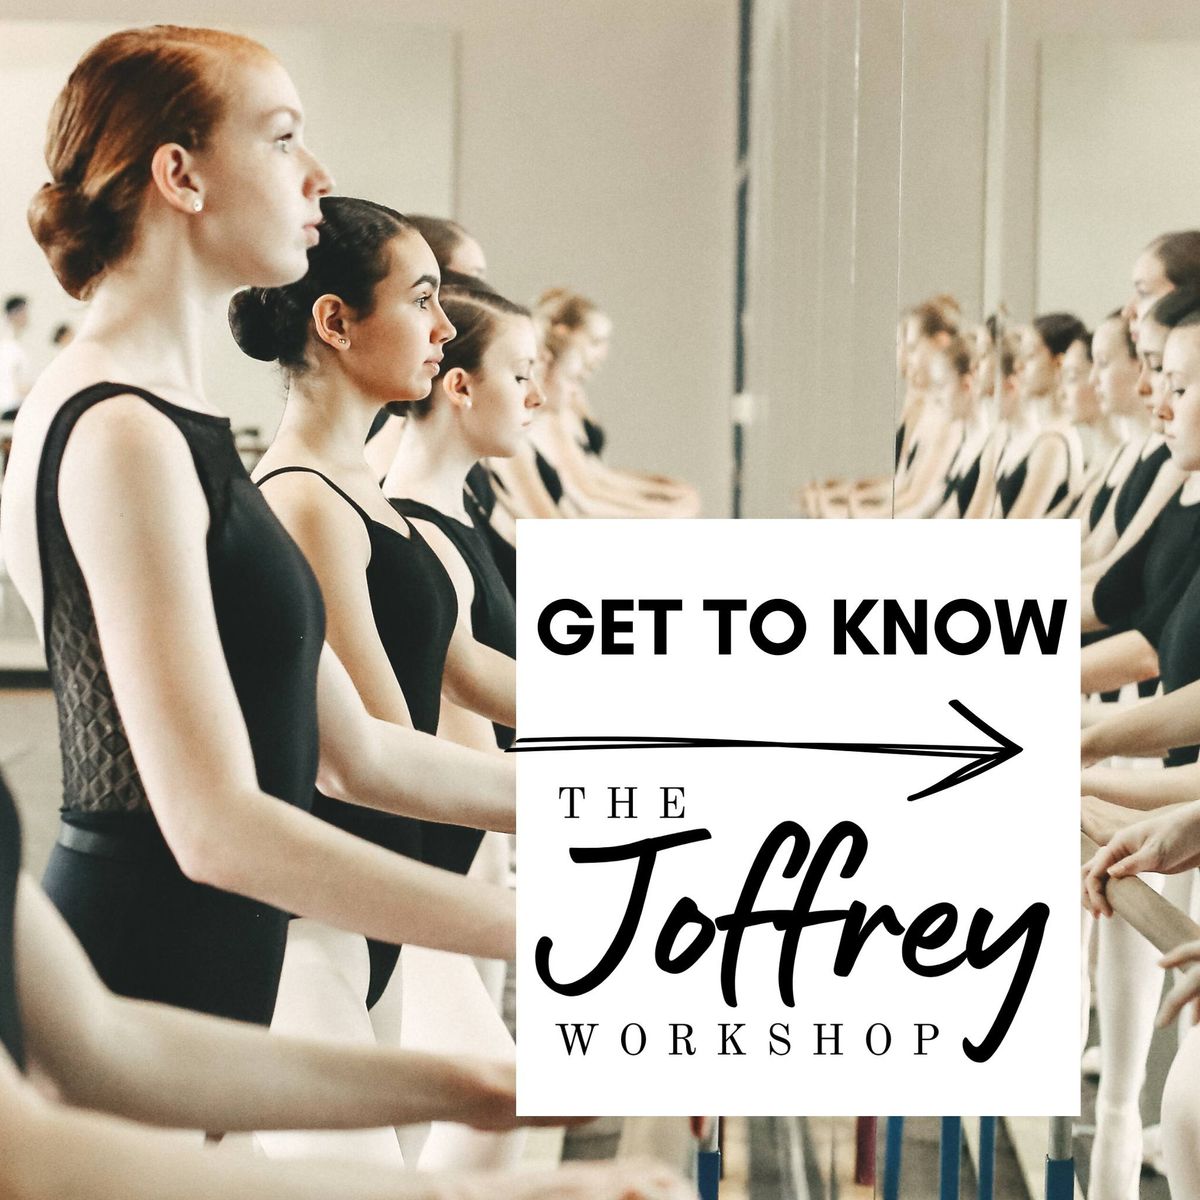 The Joffrey Workshop